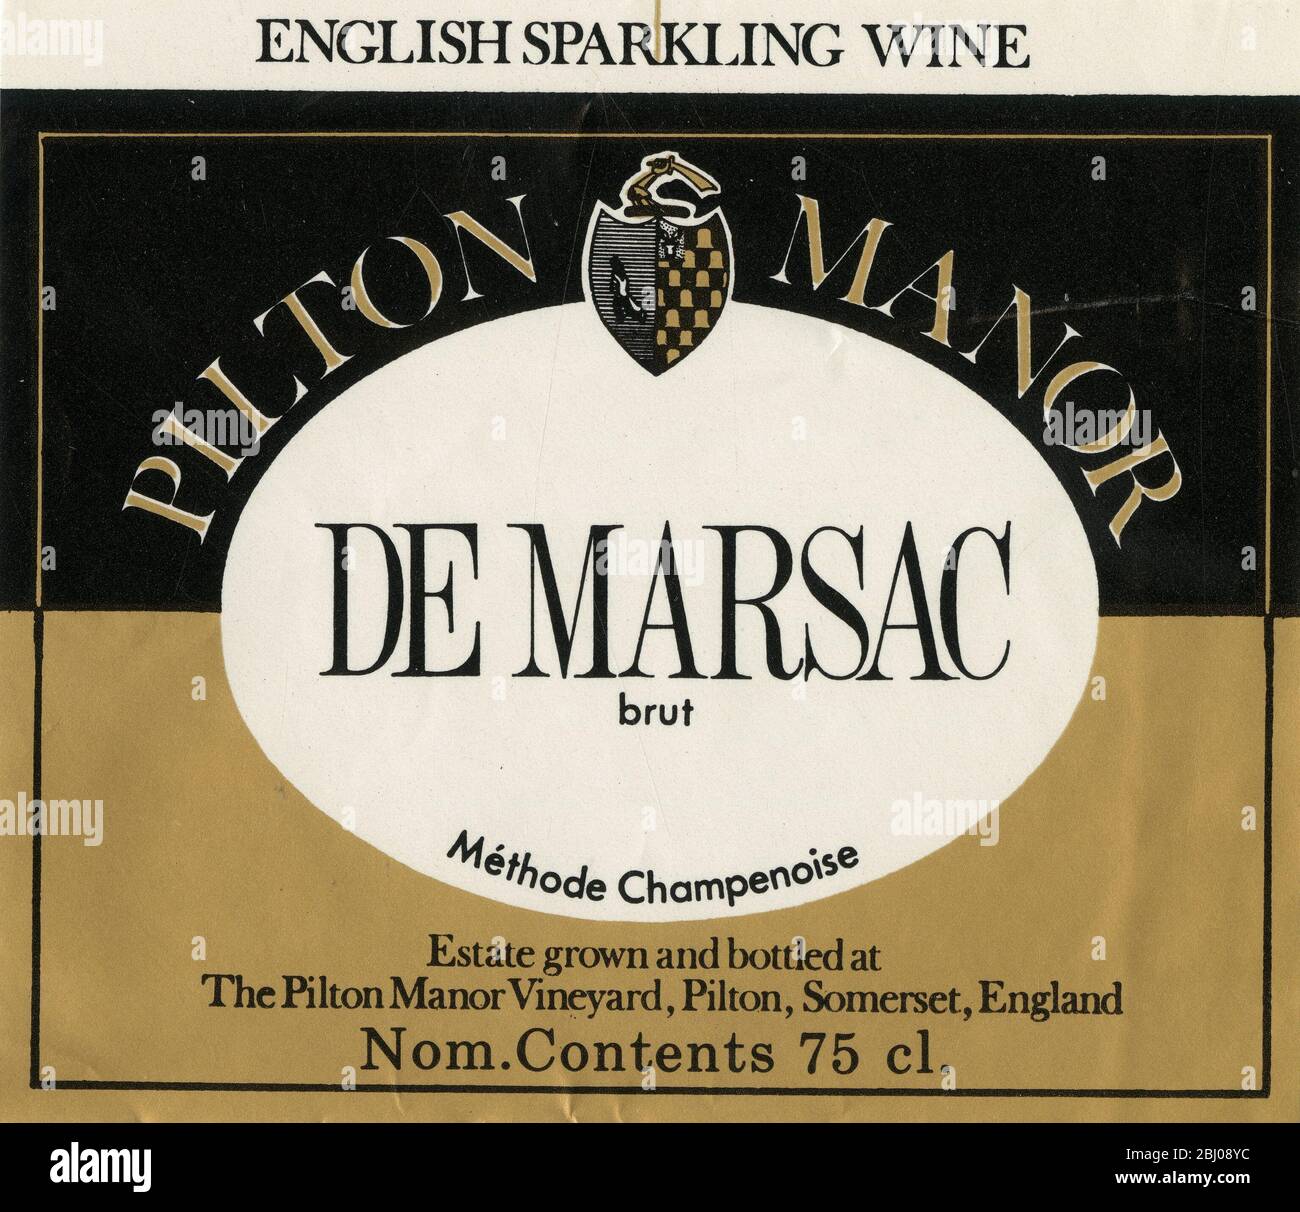 Wine Label - Pilton Manor English Sparkling Wine. A De Marsac vine variety. Produced by Nigel de Marsac Godden in Pilton, Somerset. Stock Photo